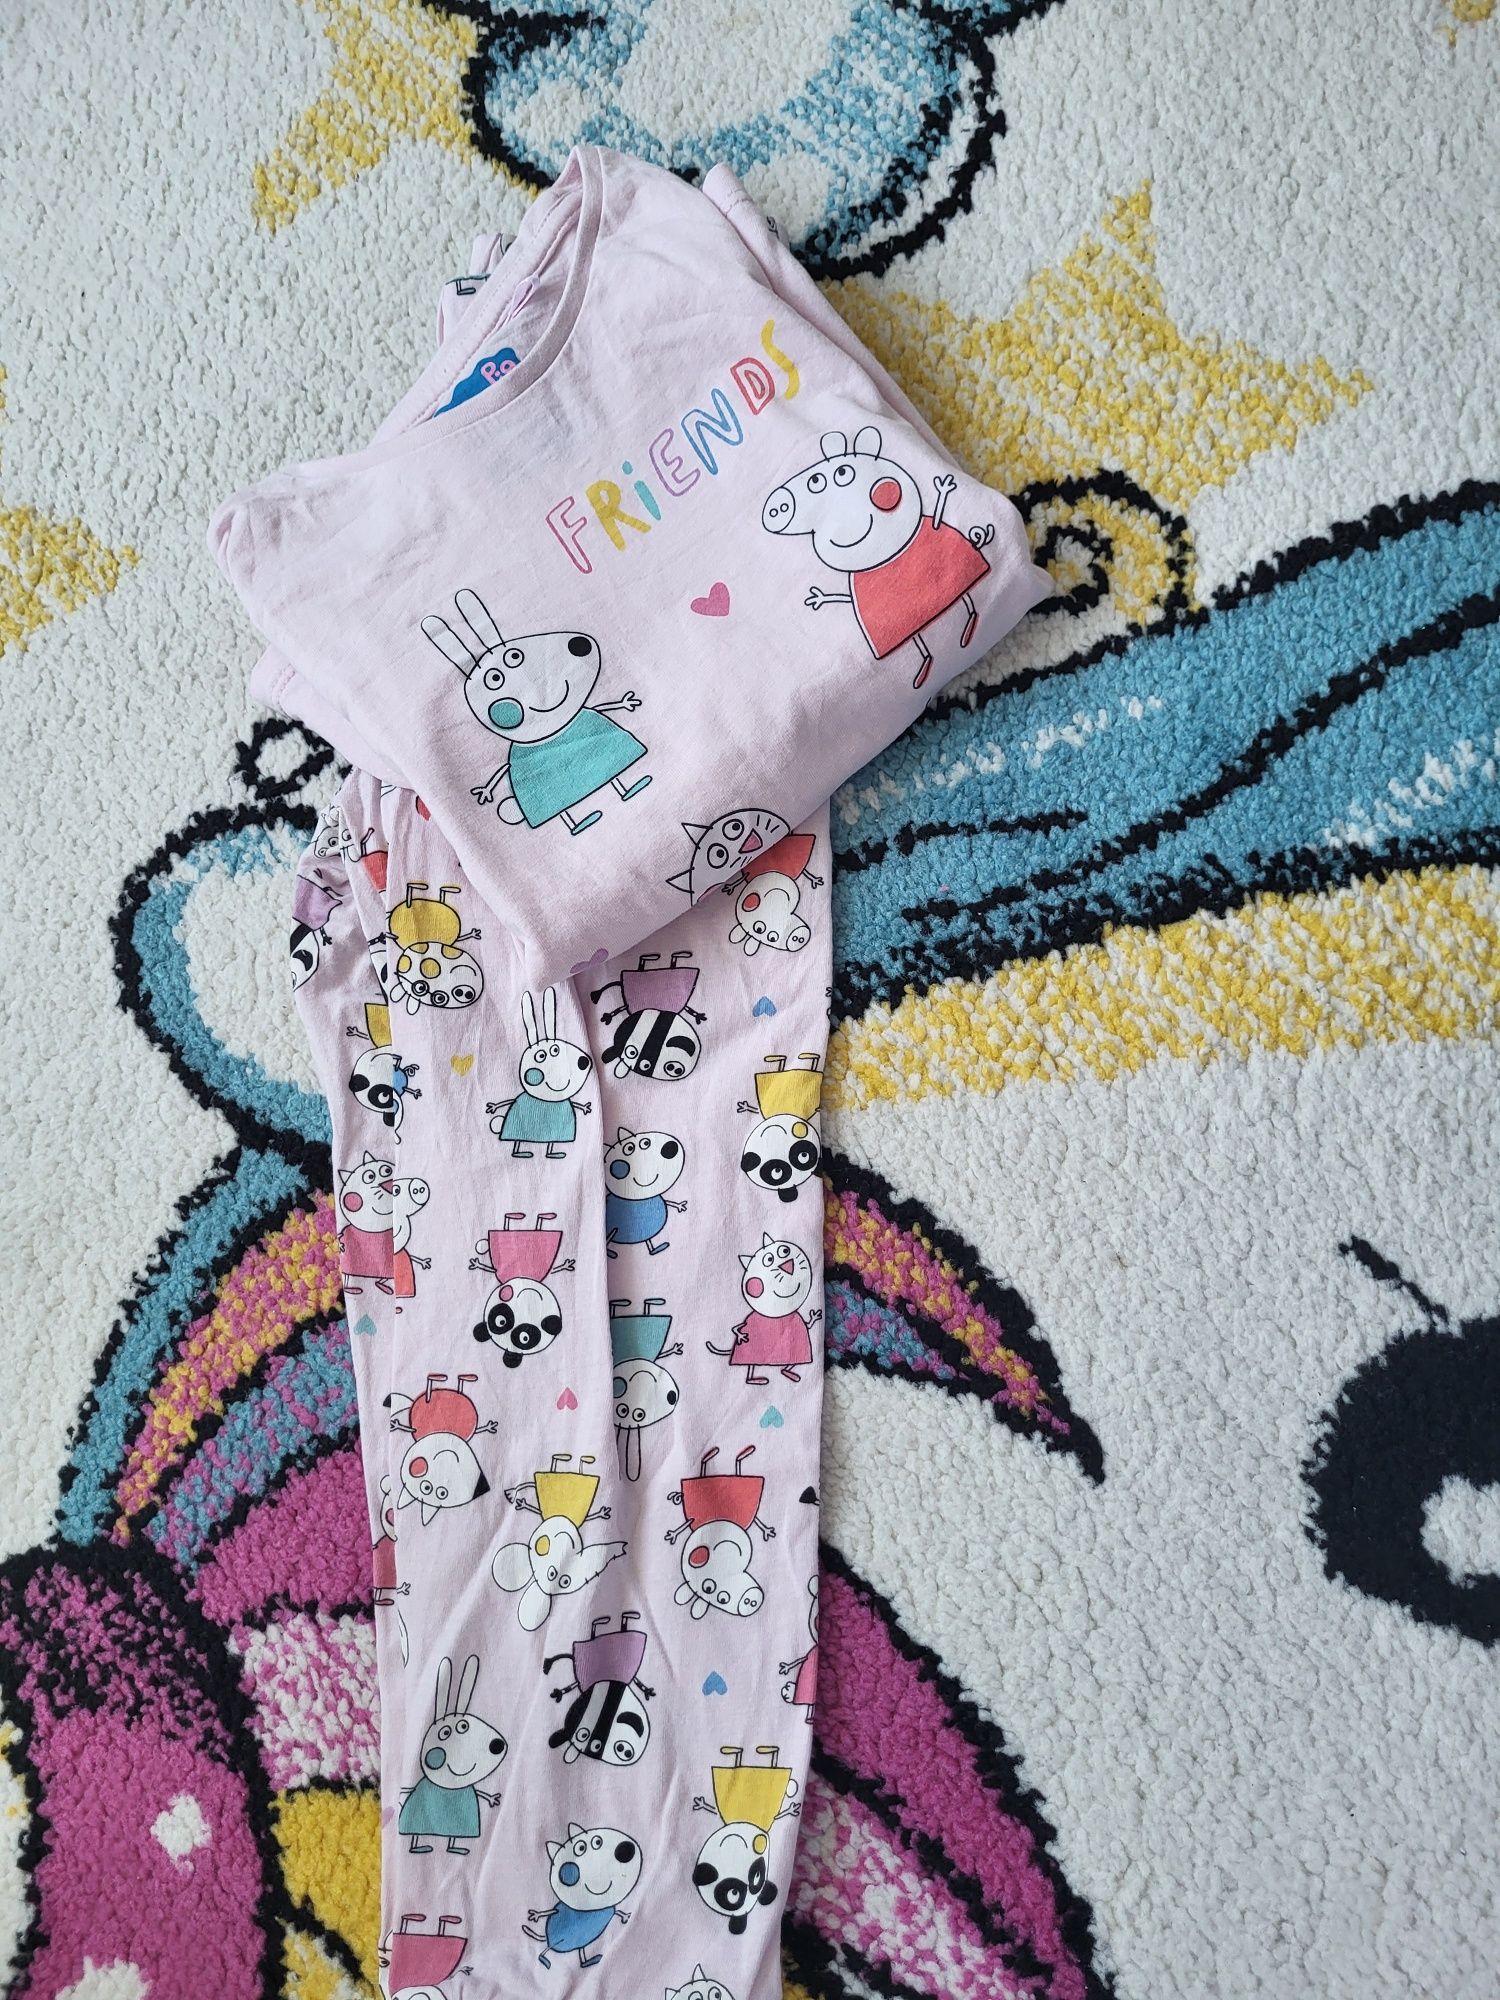 Pijama 110 Peppa Pig